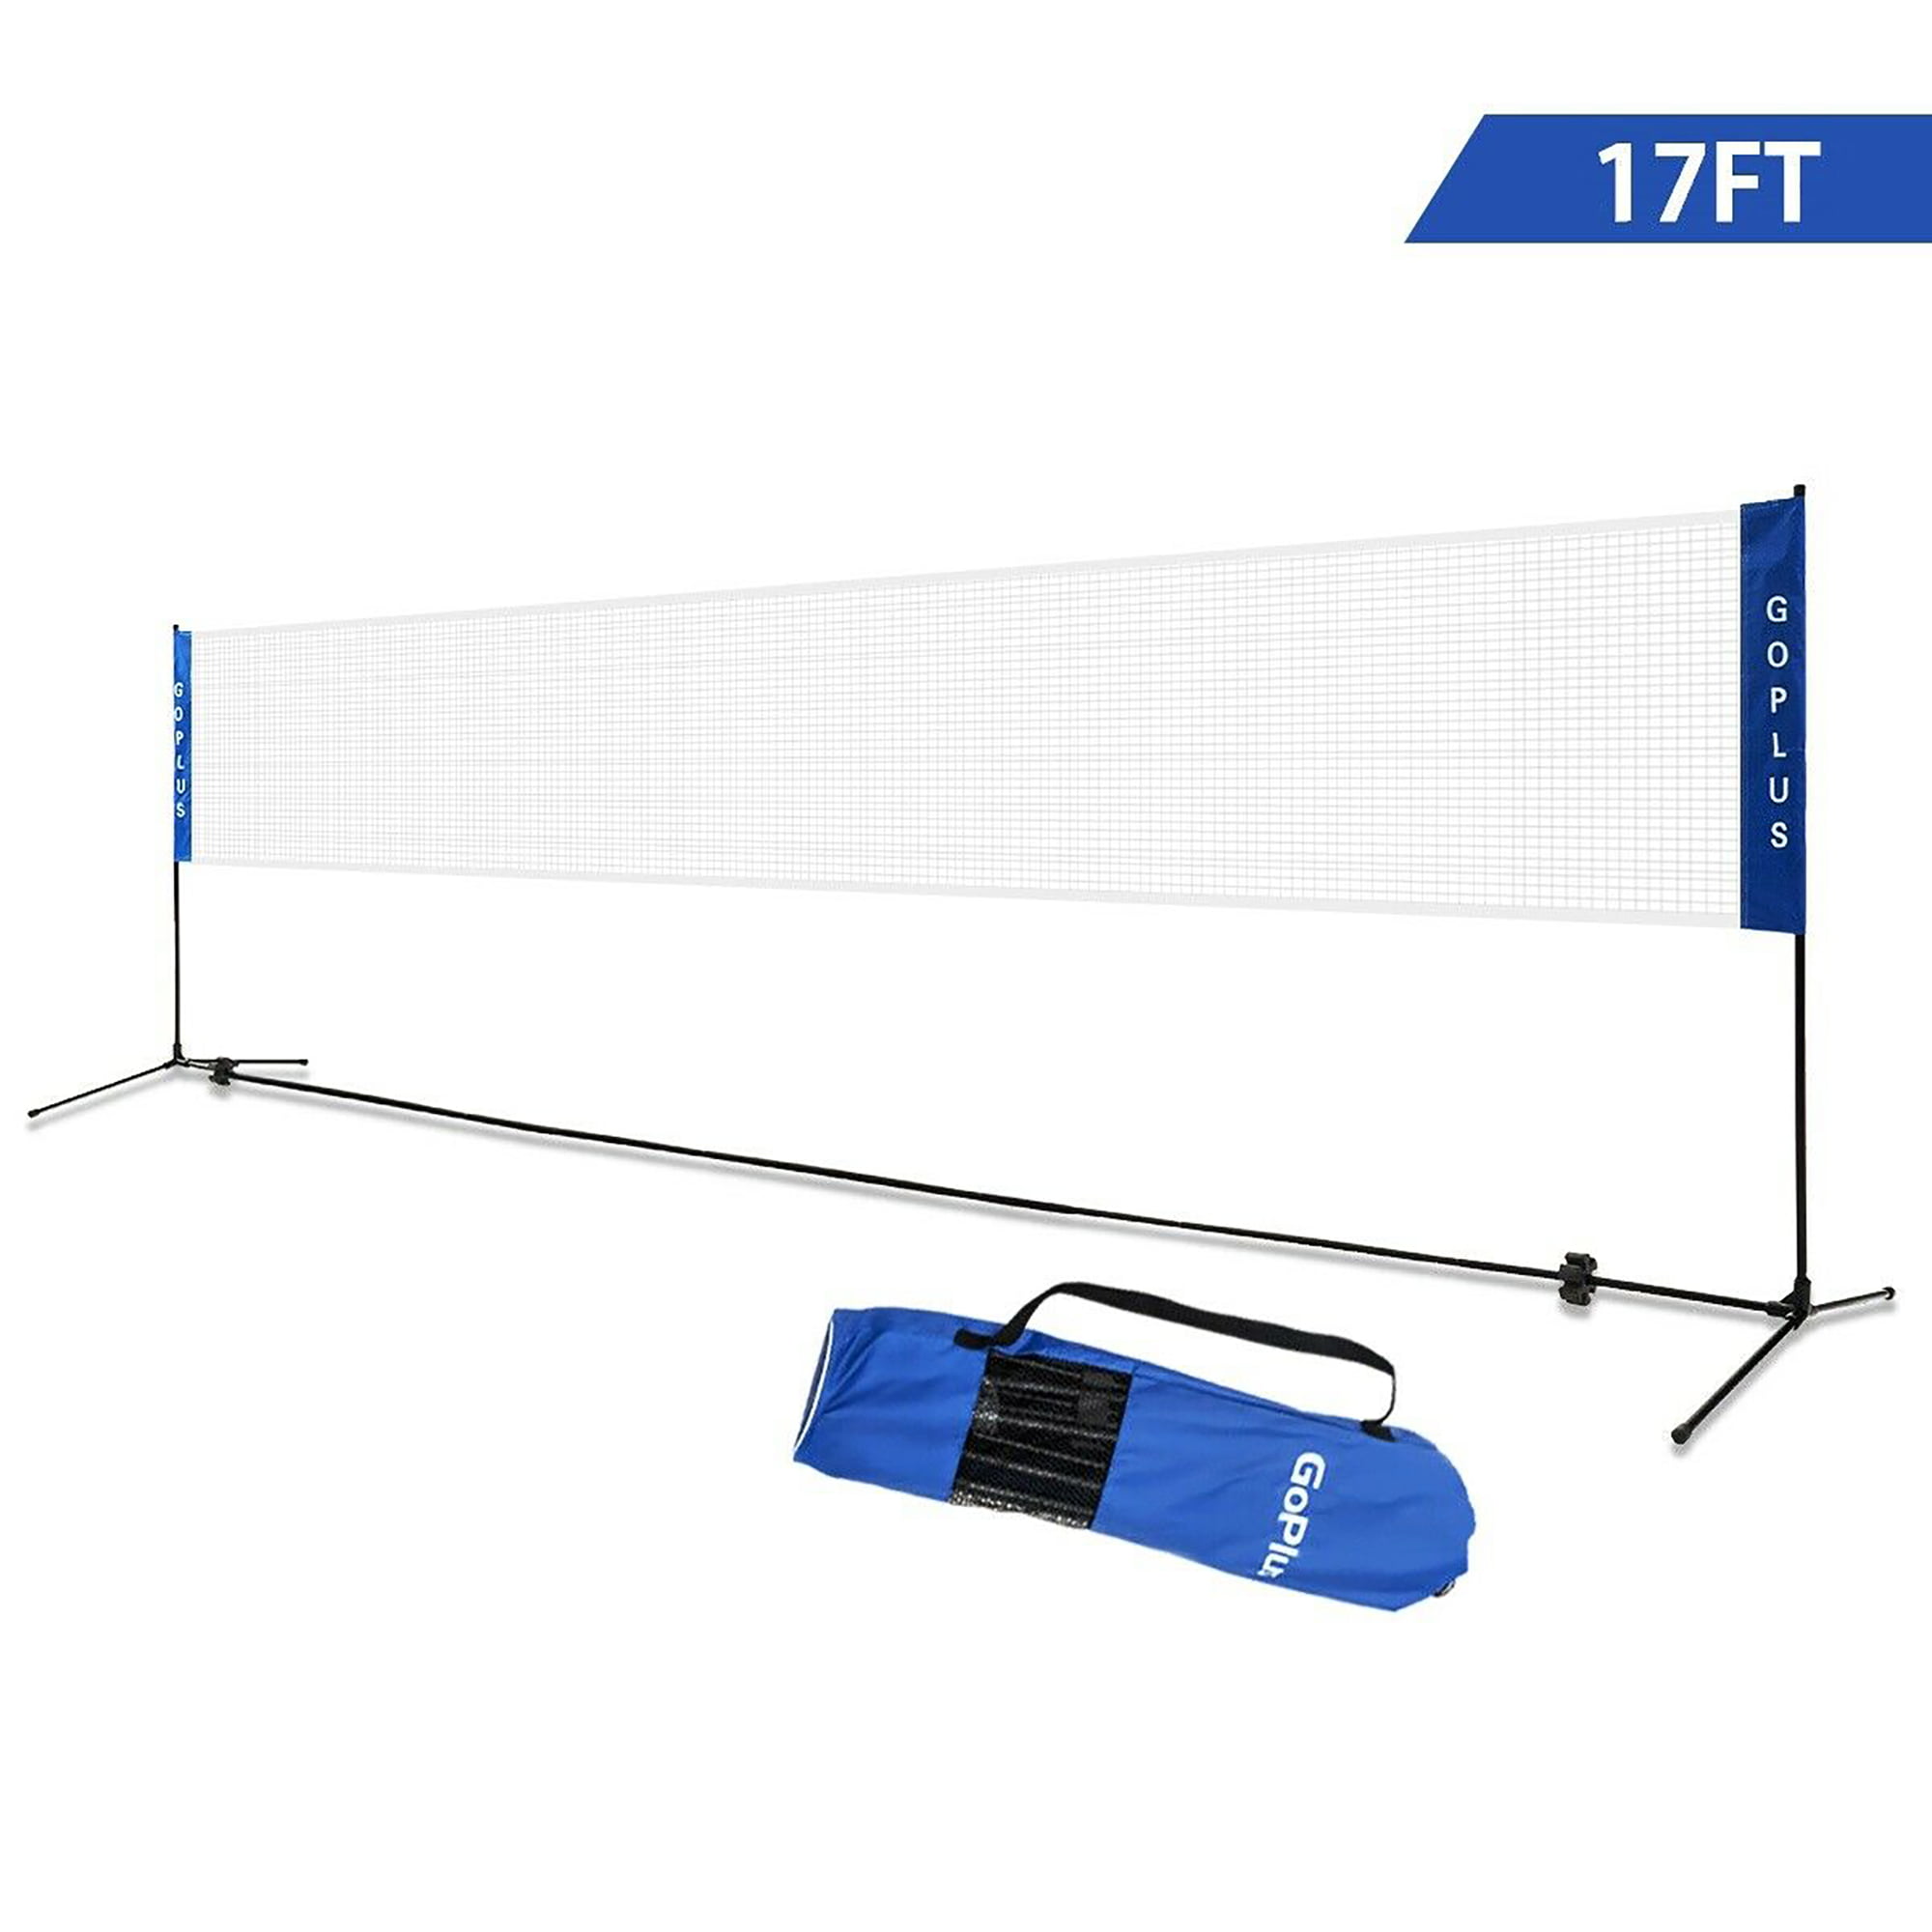 Portable Outdoor Badminton Tennis Volleyball Net Stand Beach Sport Easy Install 